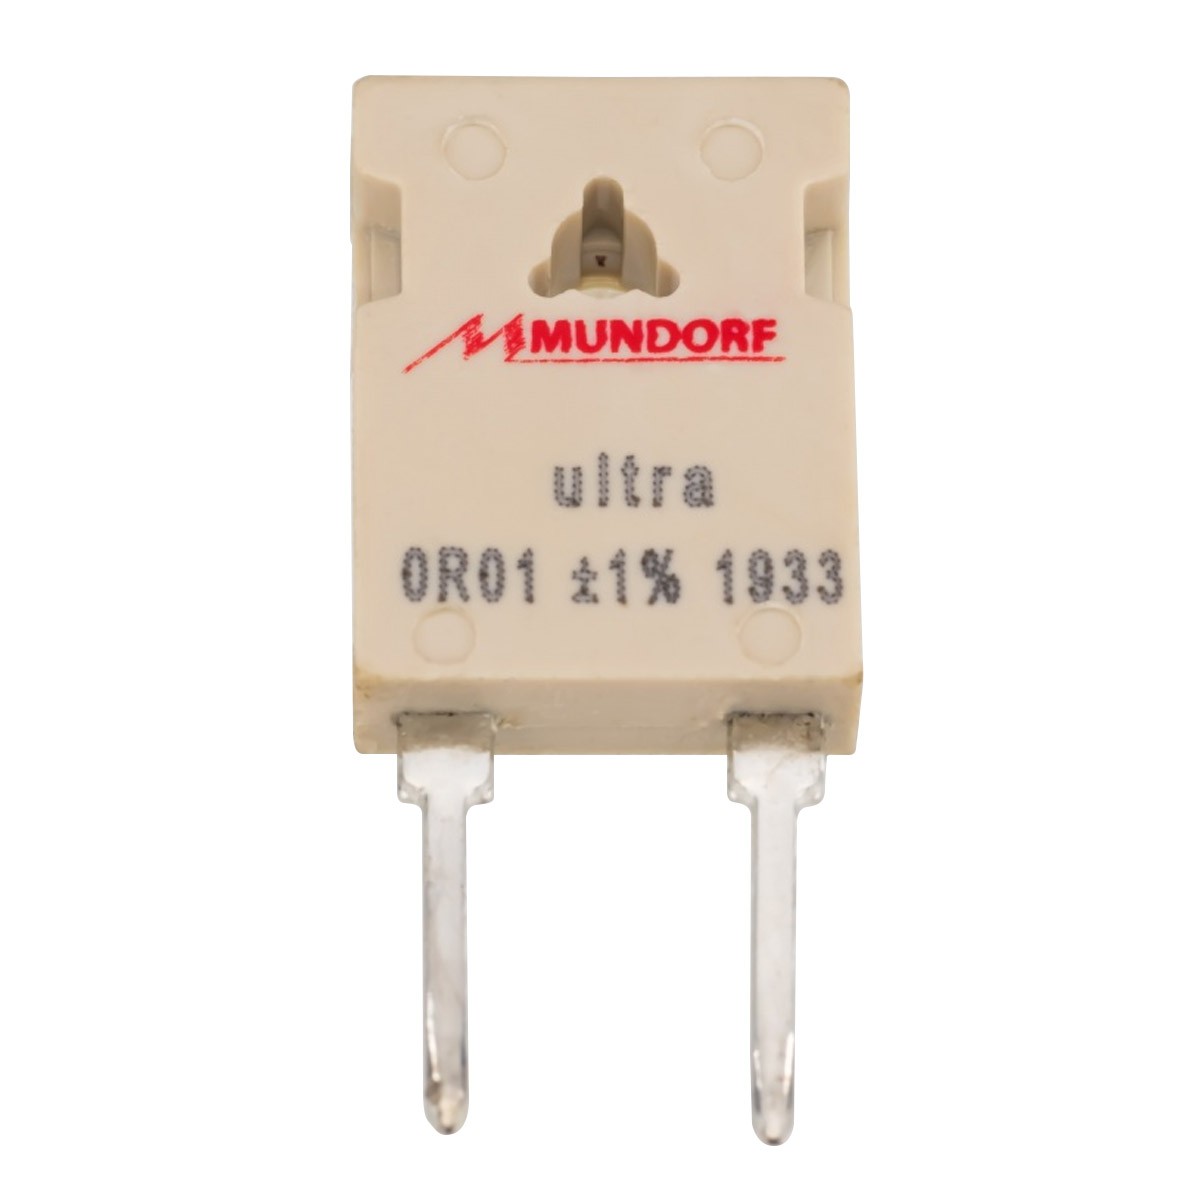 MUNDORF MRESIST ULTRA Resistor 30W 3 Ohm